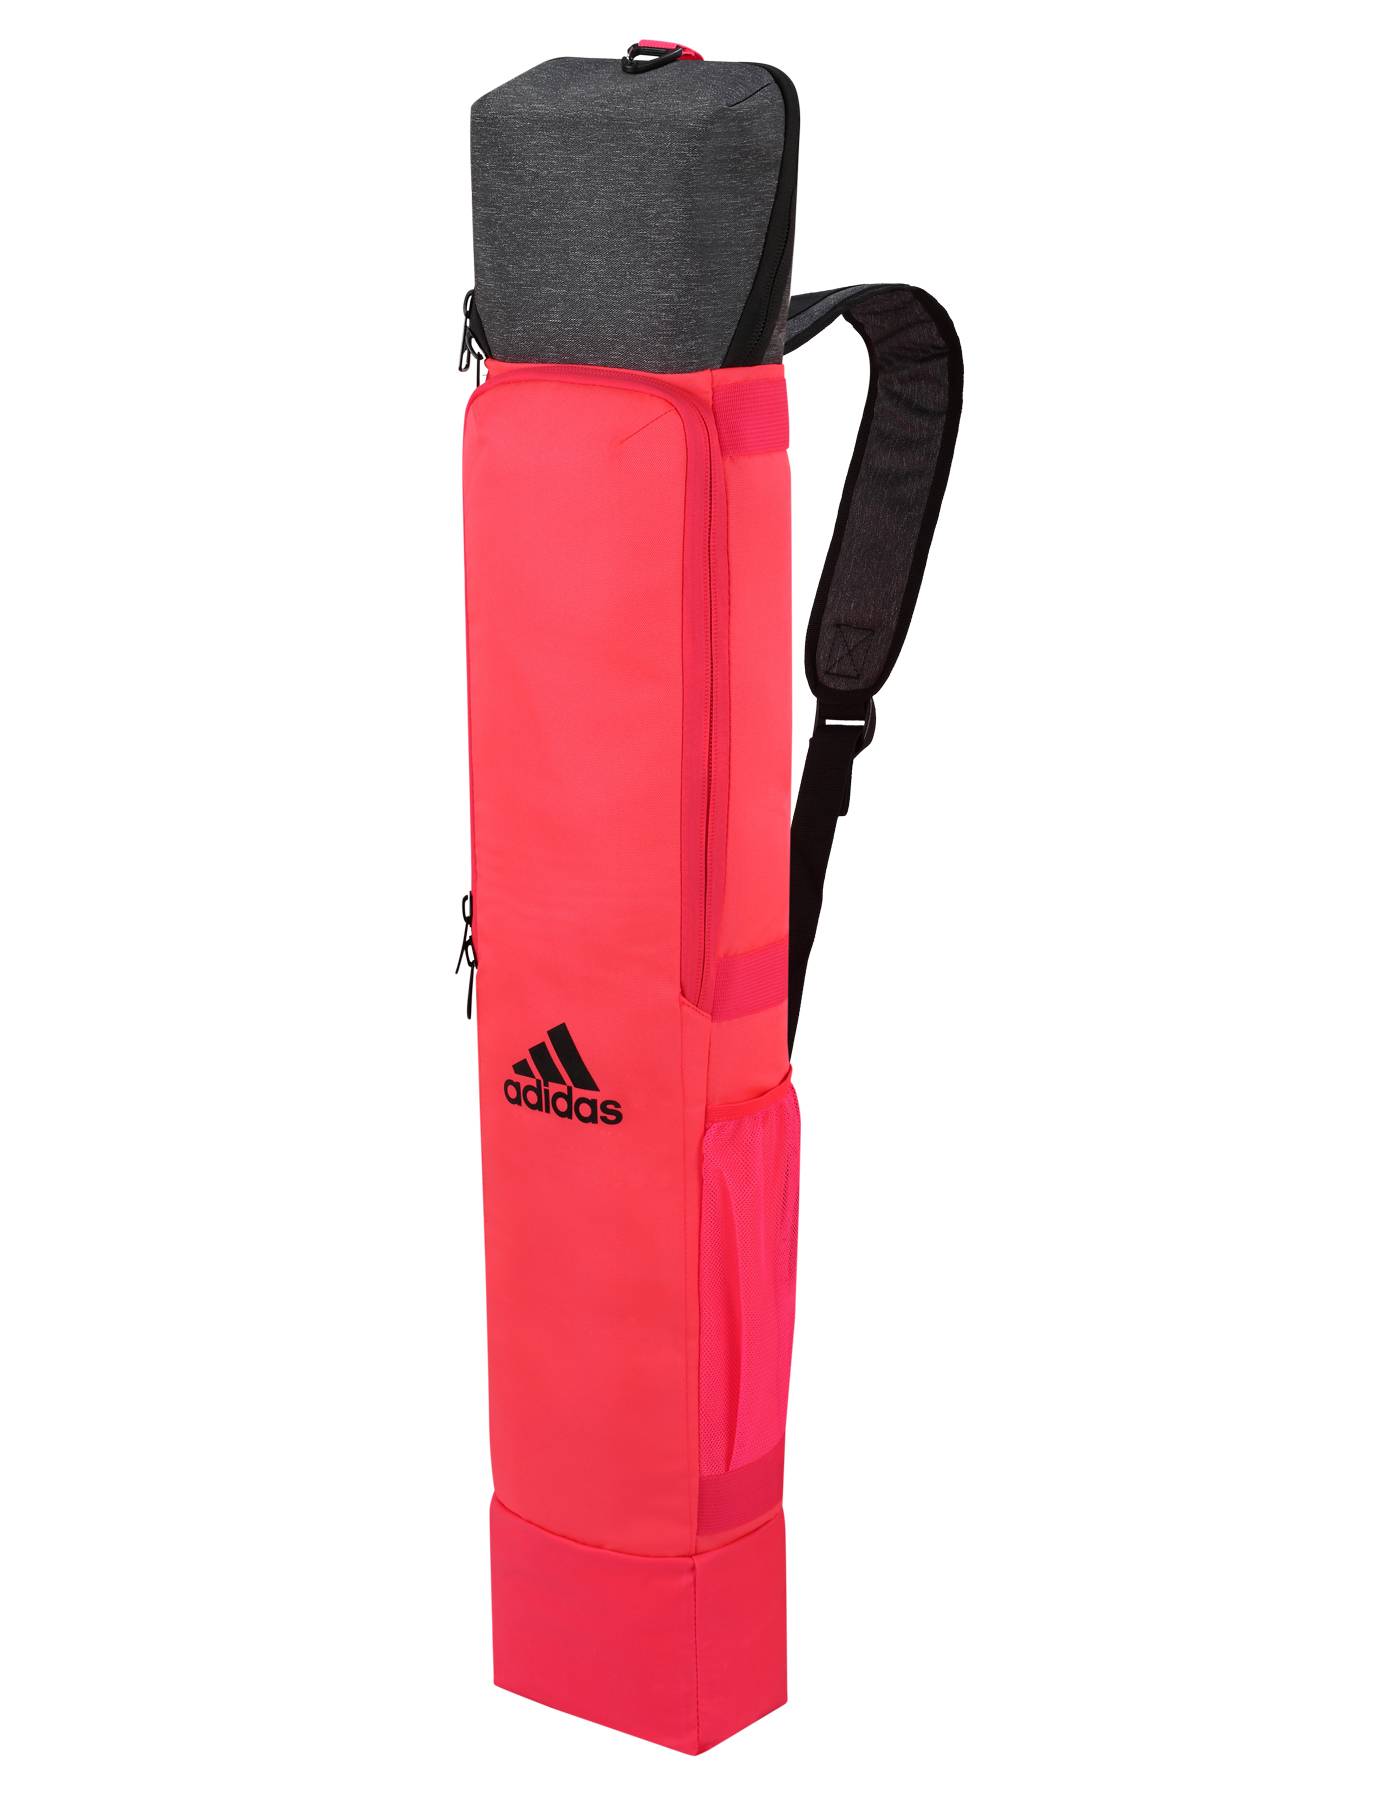 adidas field hockey stick bag